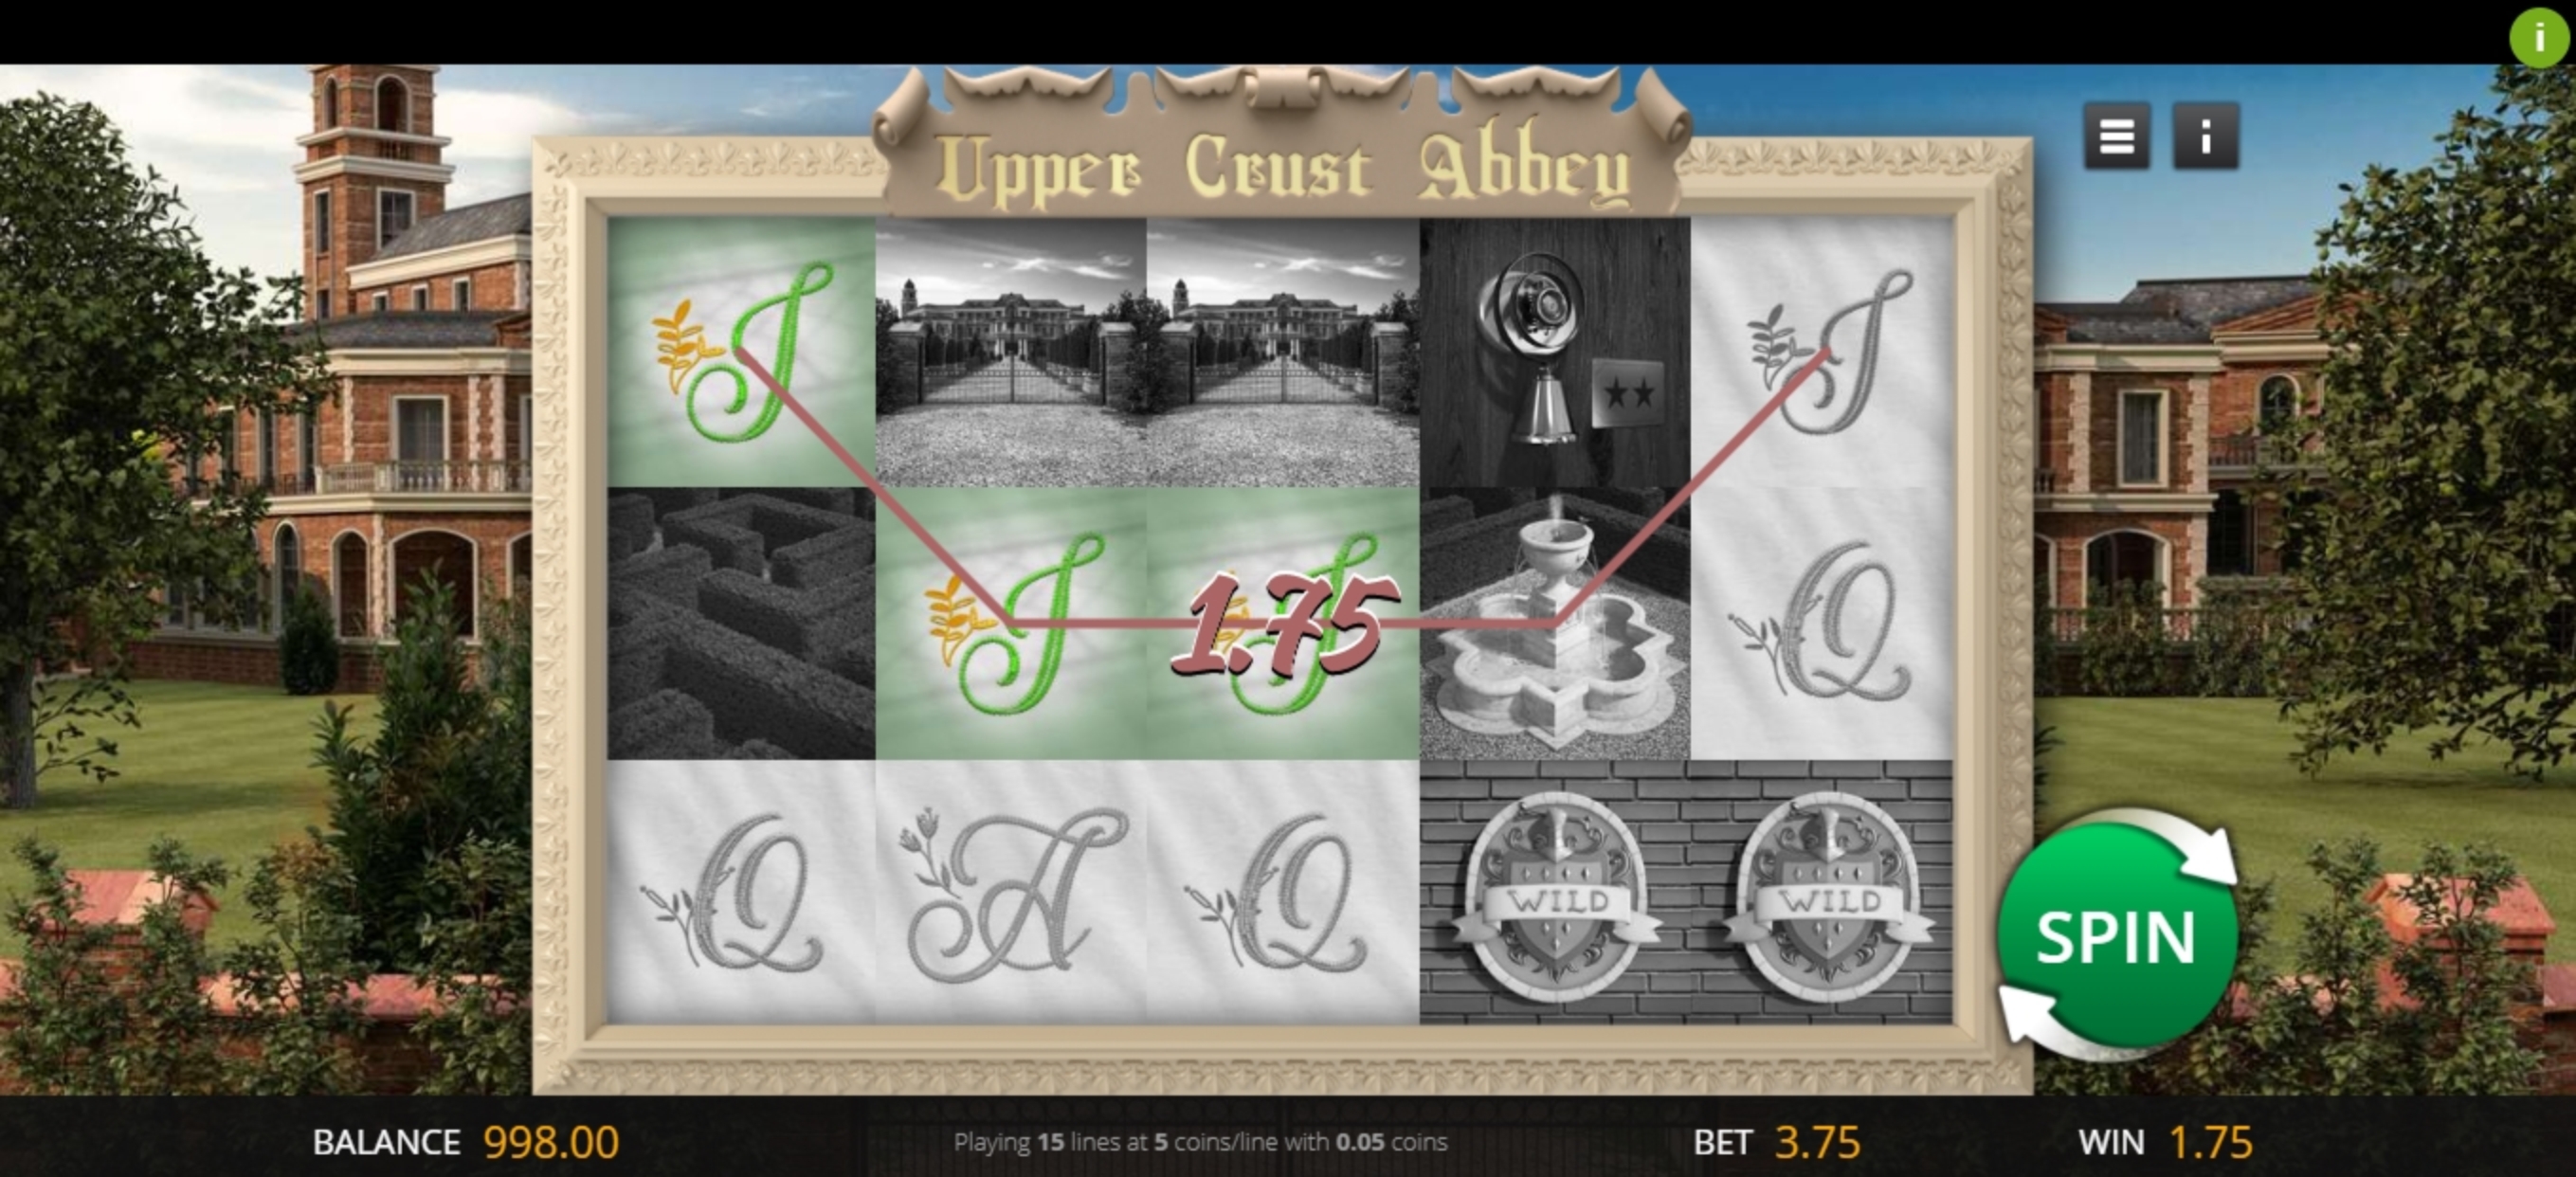 Win Money in Upper Crust Abbey Free Slot Game by Genii